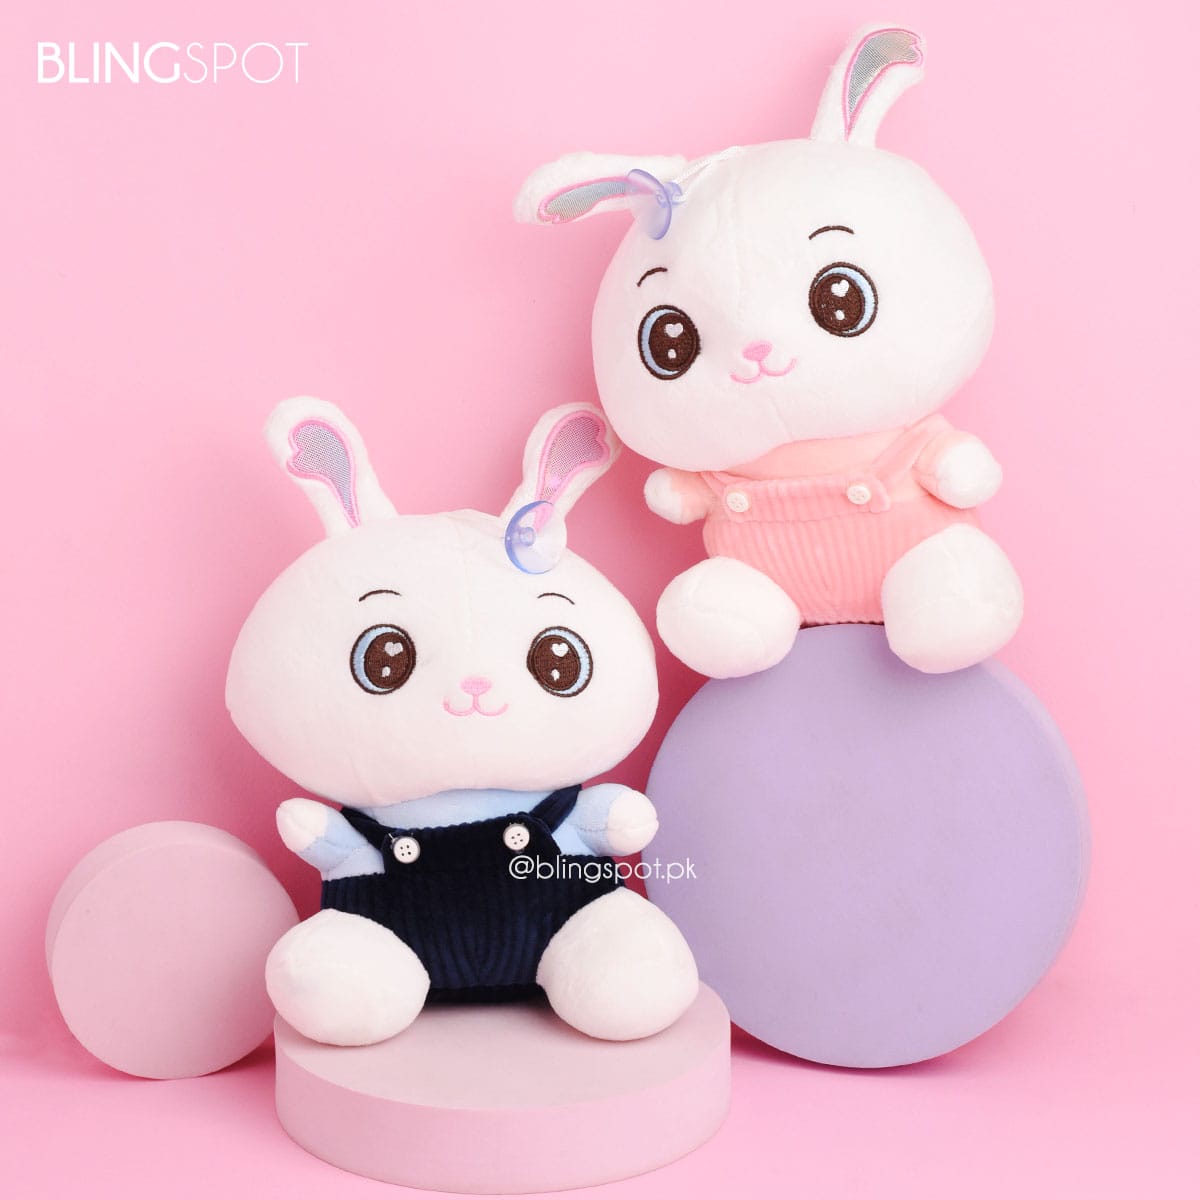 Bunny Style 2 Plushie Soft Toy